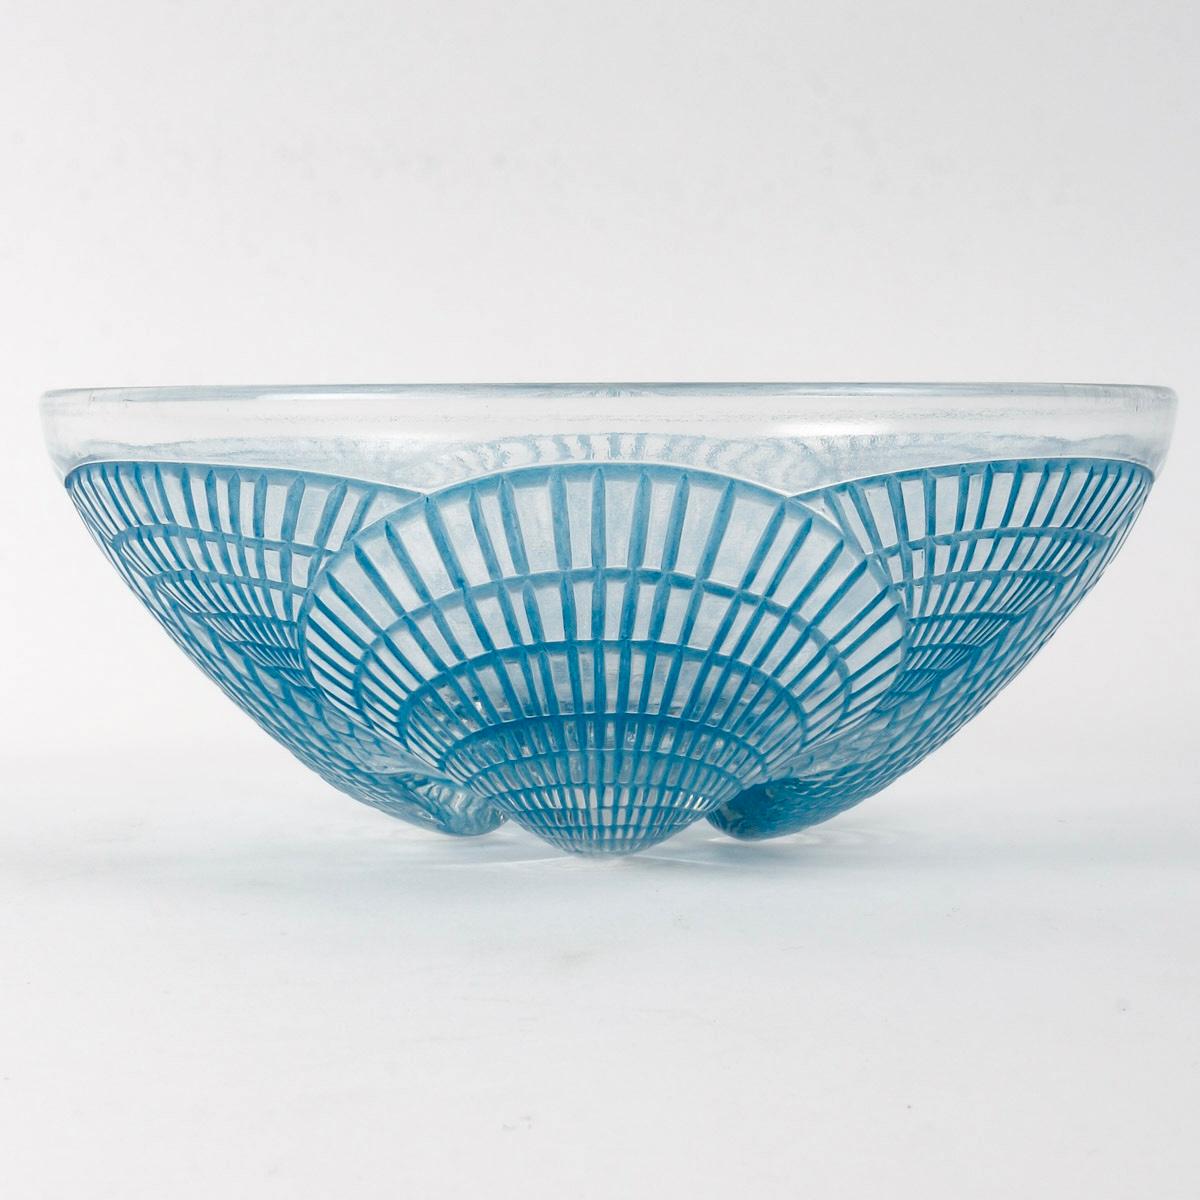 1924 René Lalique - Tafelgeschirr Teller Schale Coquilles Muscheln Glas Blau Patina (Art déco) im Angebot